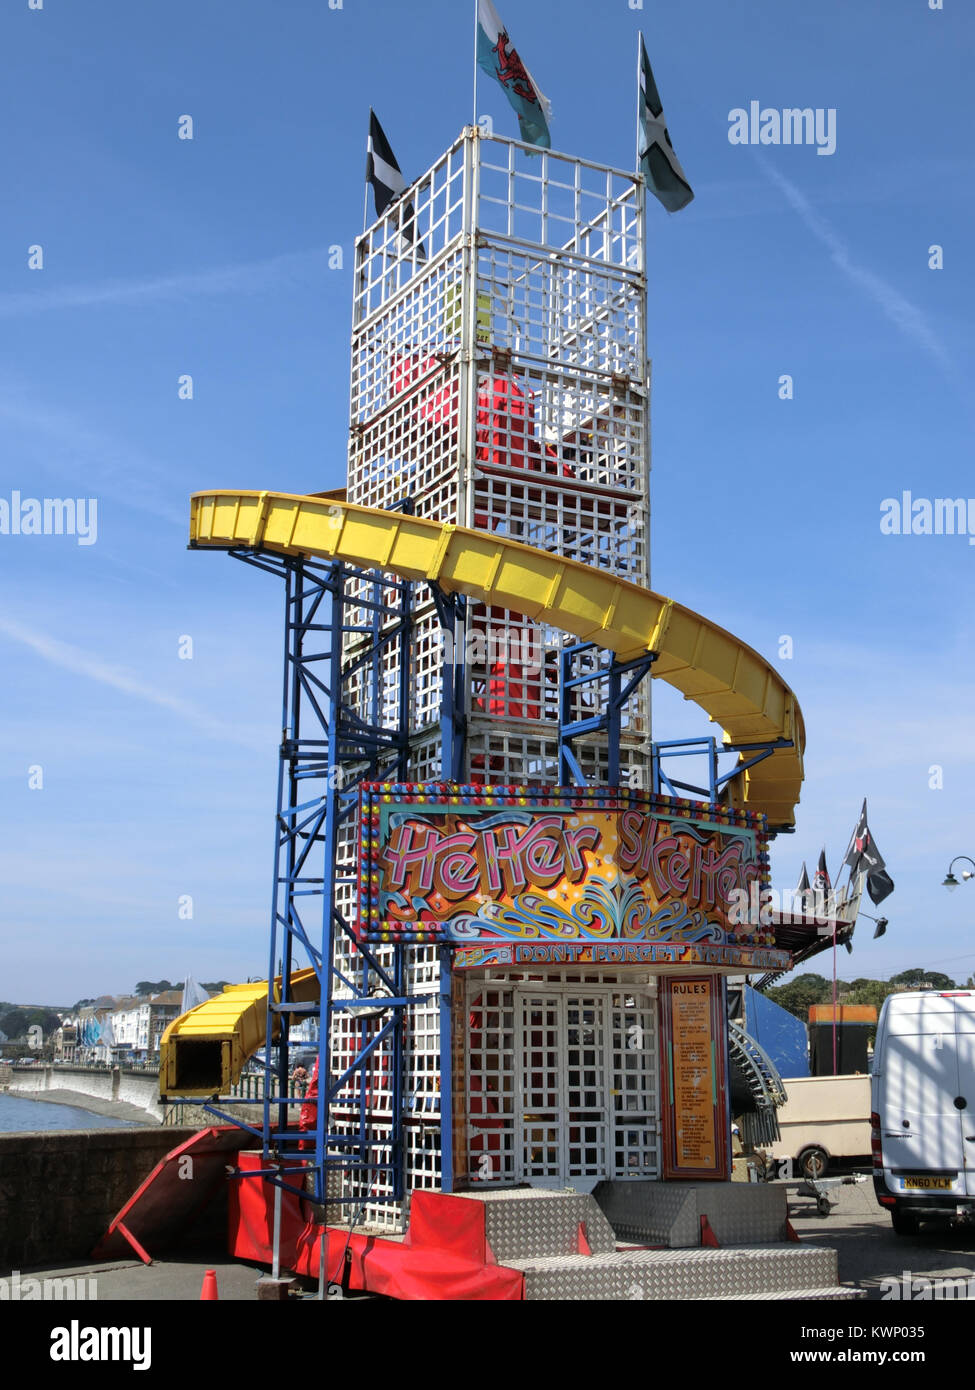 Helter Skelter Fairground Ride, UK in Summer Stock Photo